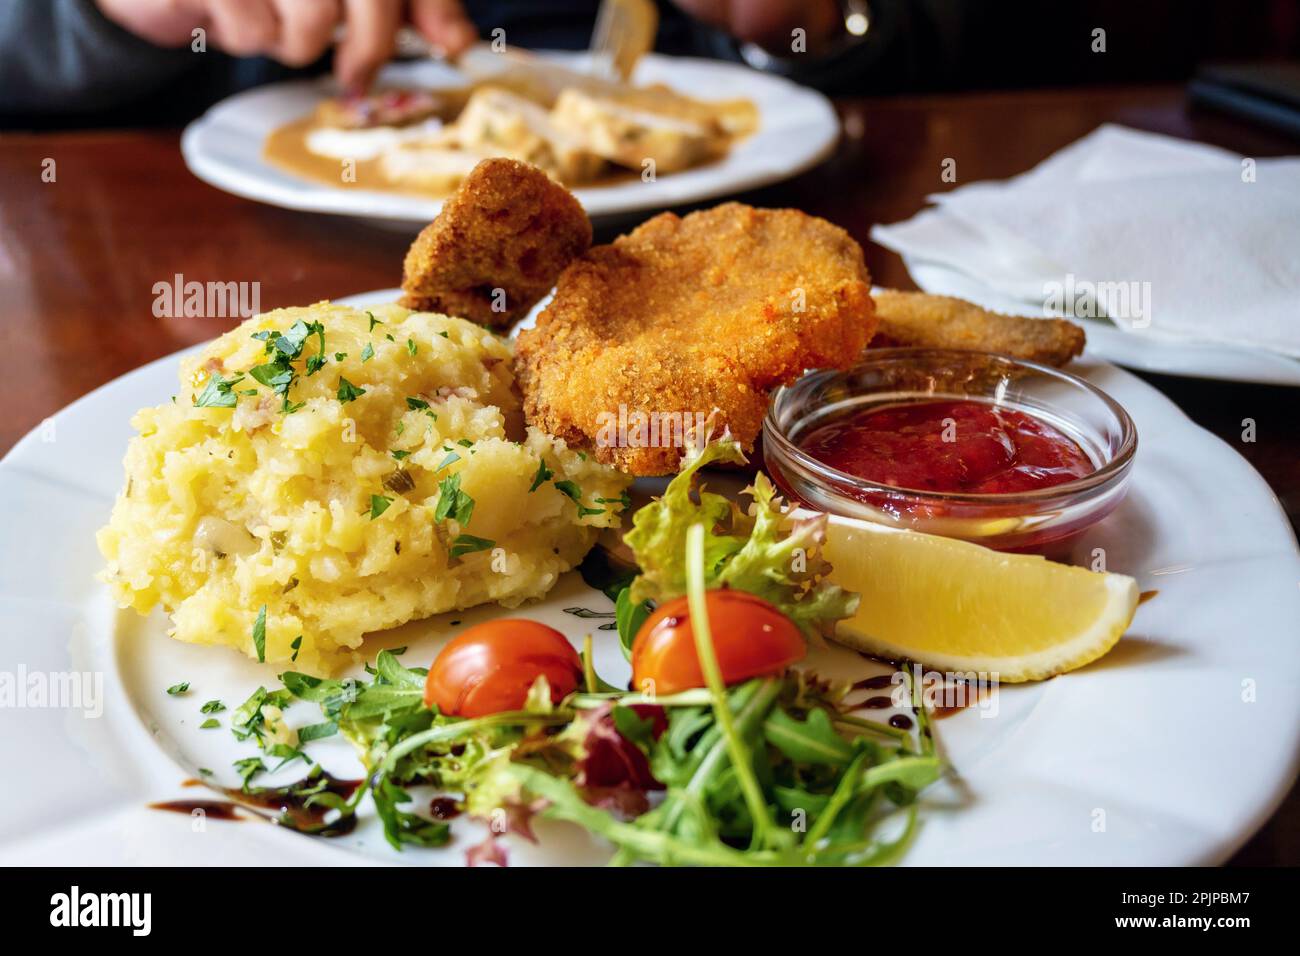 Fried schnitzel, mashed potato, green leaf, tomato and cranberry marmelade on white table, restaurant. Stock Photo